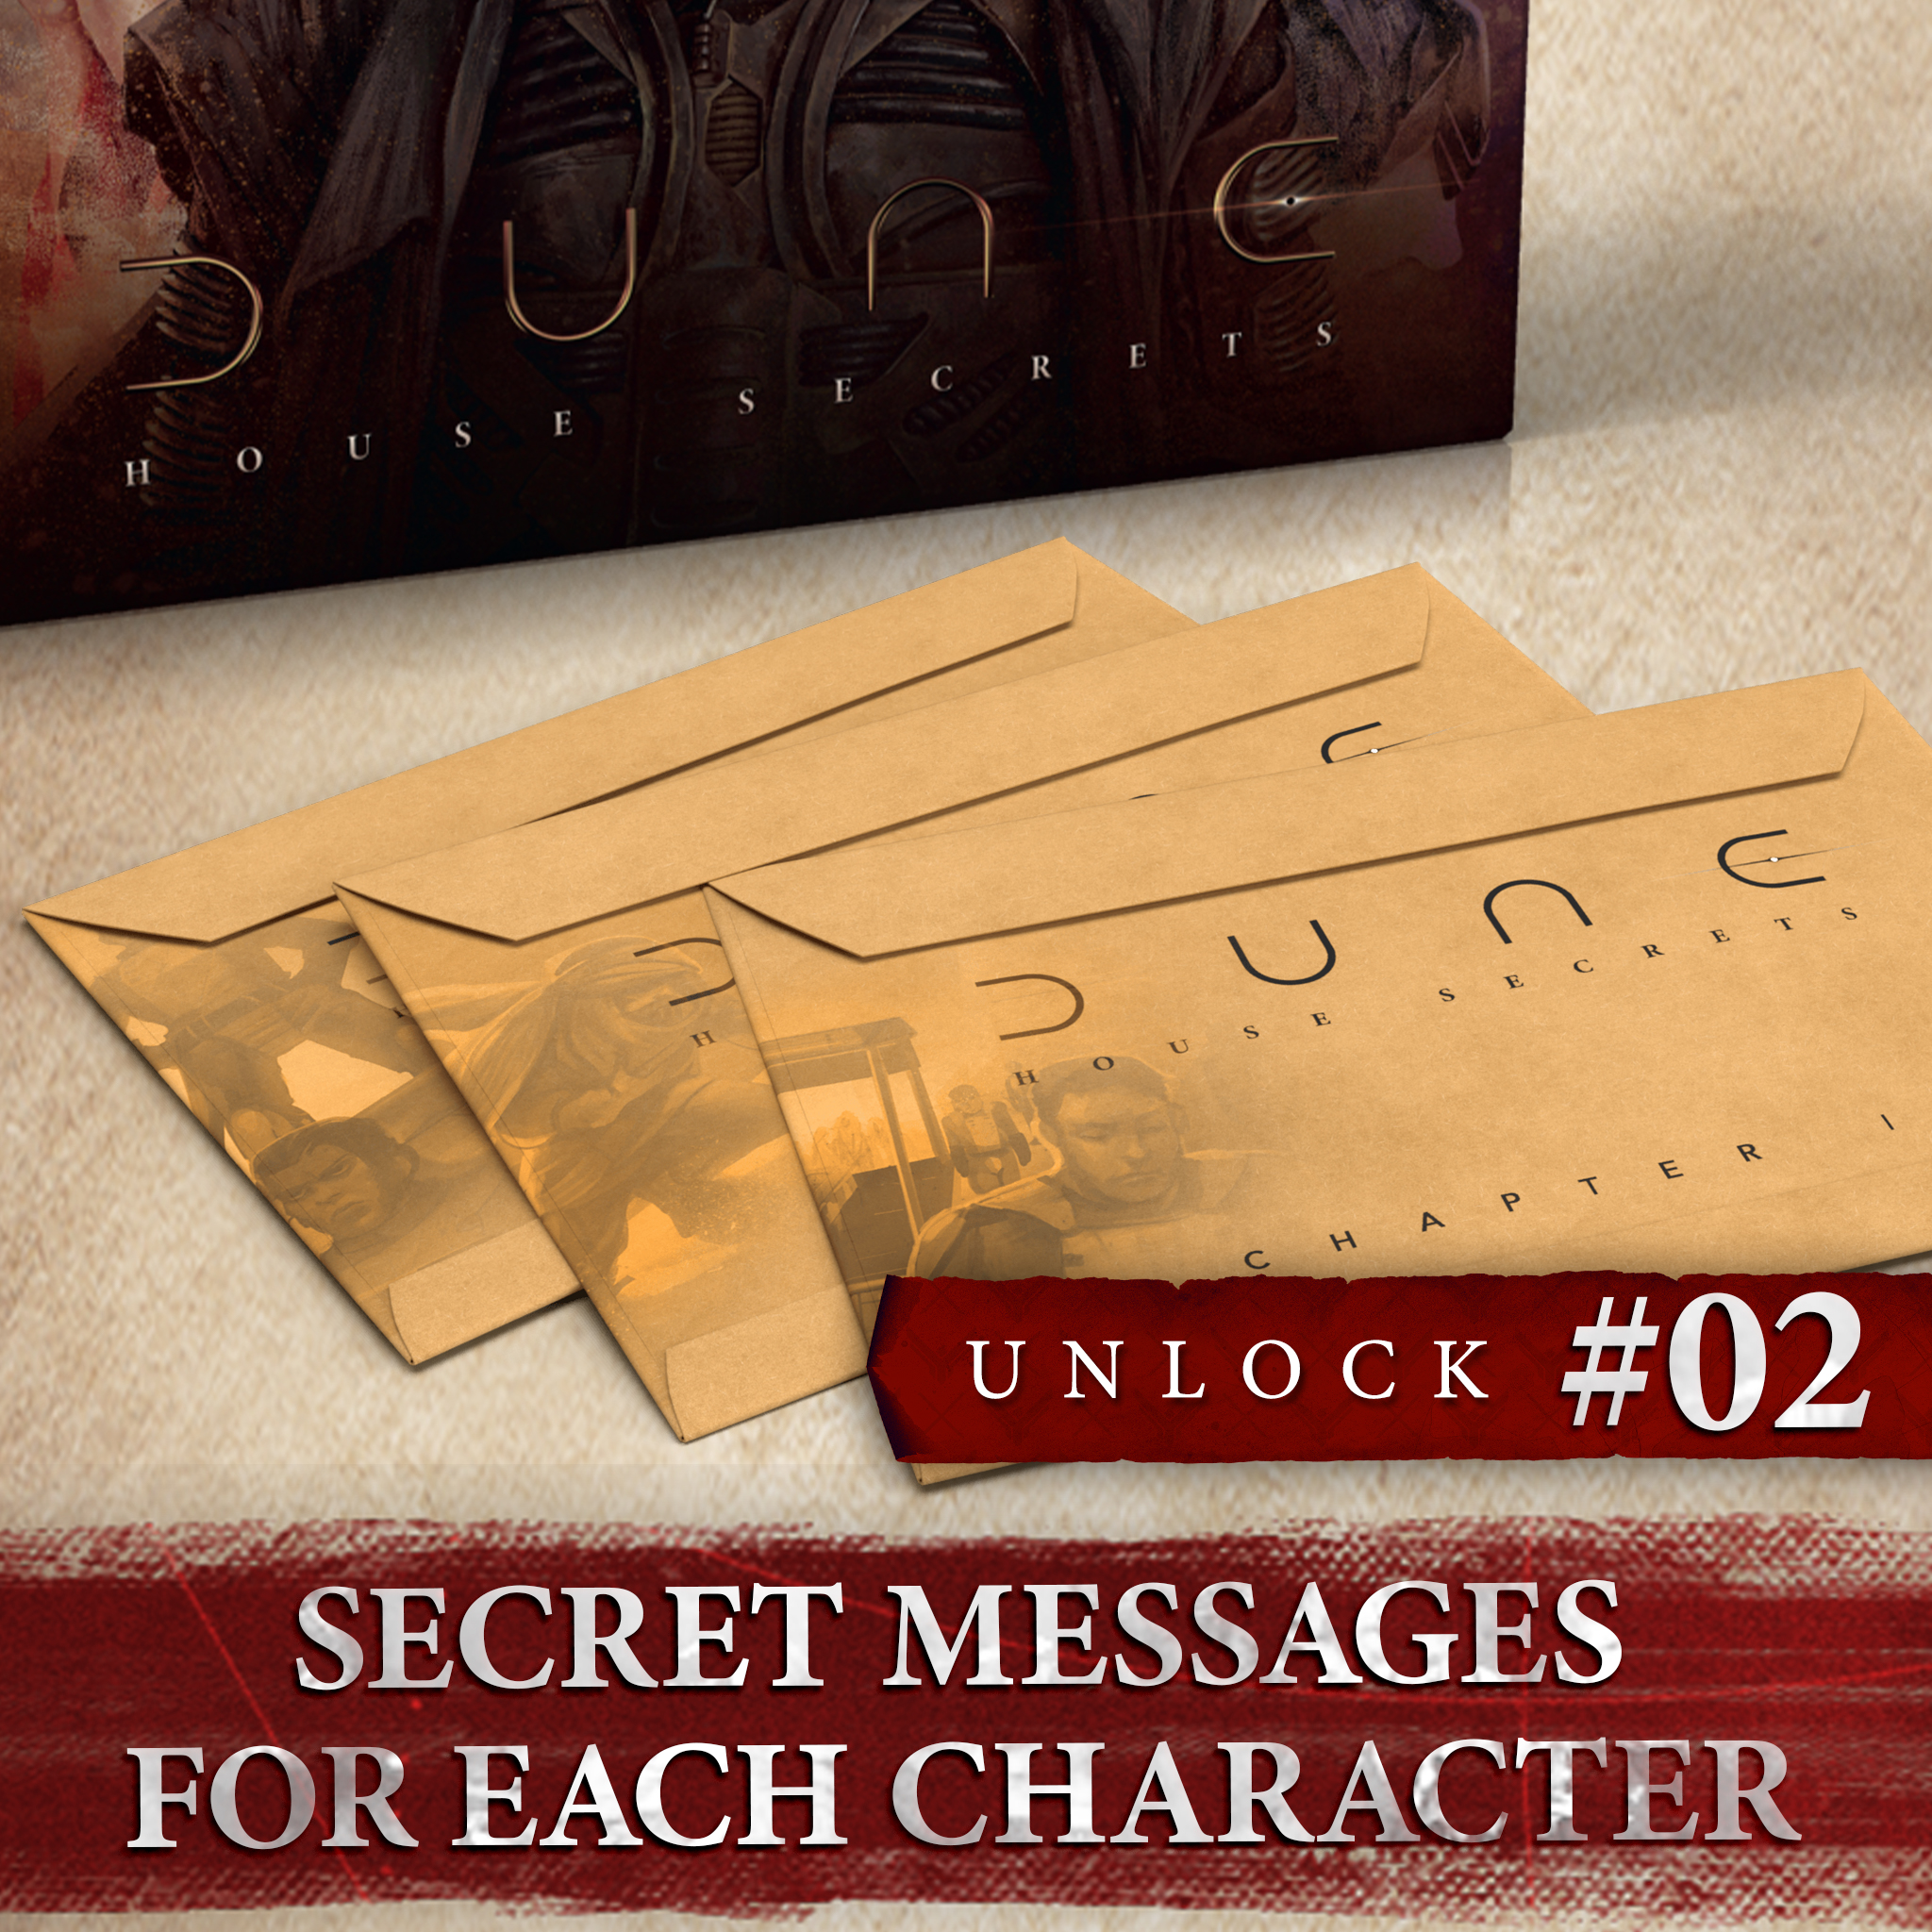 Dune: House Secrets - Unlock #02